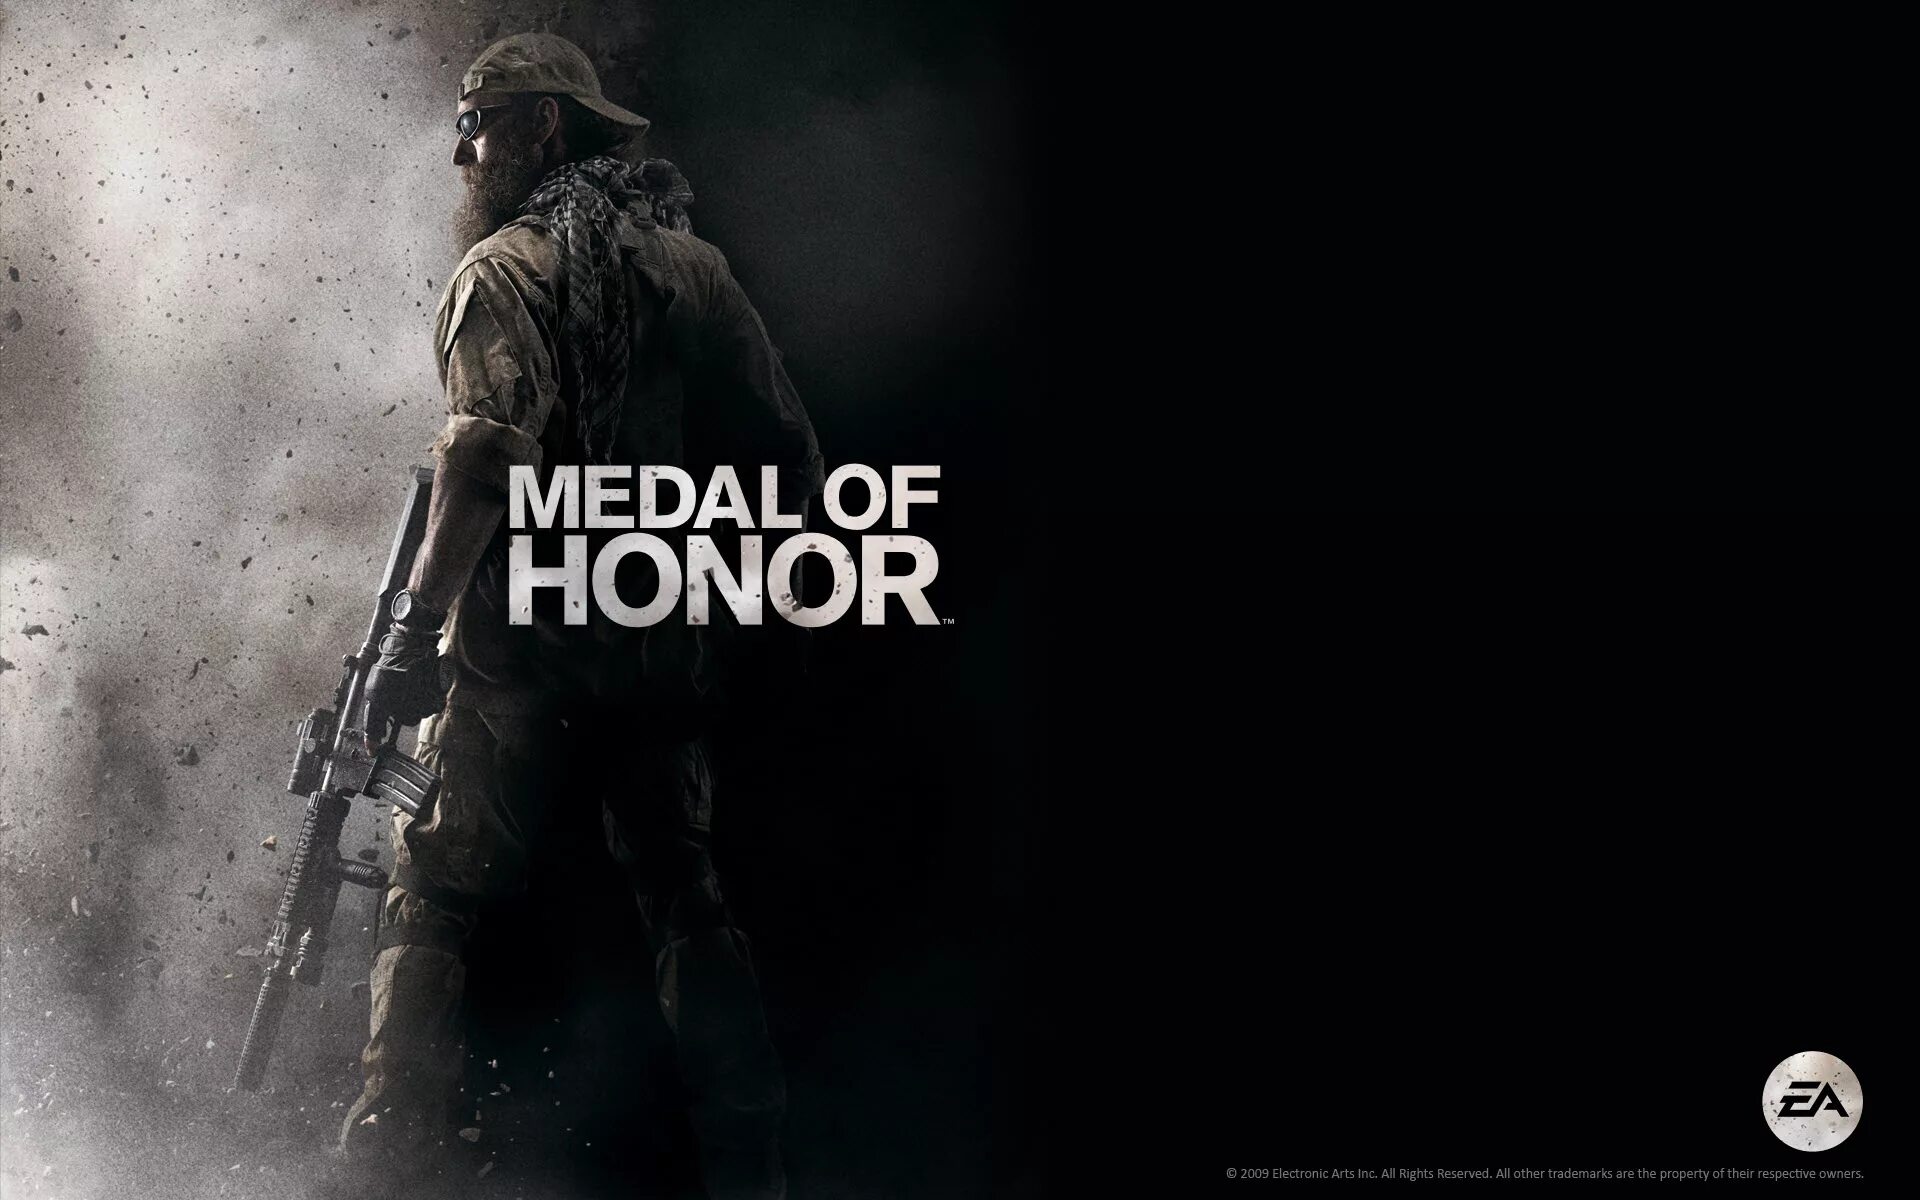 Игра Medal of Honor Warfighter. Медаль оф хонор 2010 обои. Медаль за отвагу игра 2010. Игры Medal of Honor 2010 Limited. Medal of honor отзывы